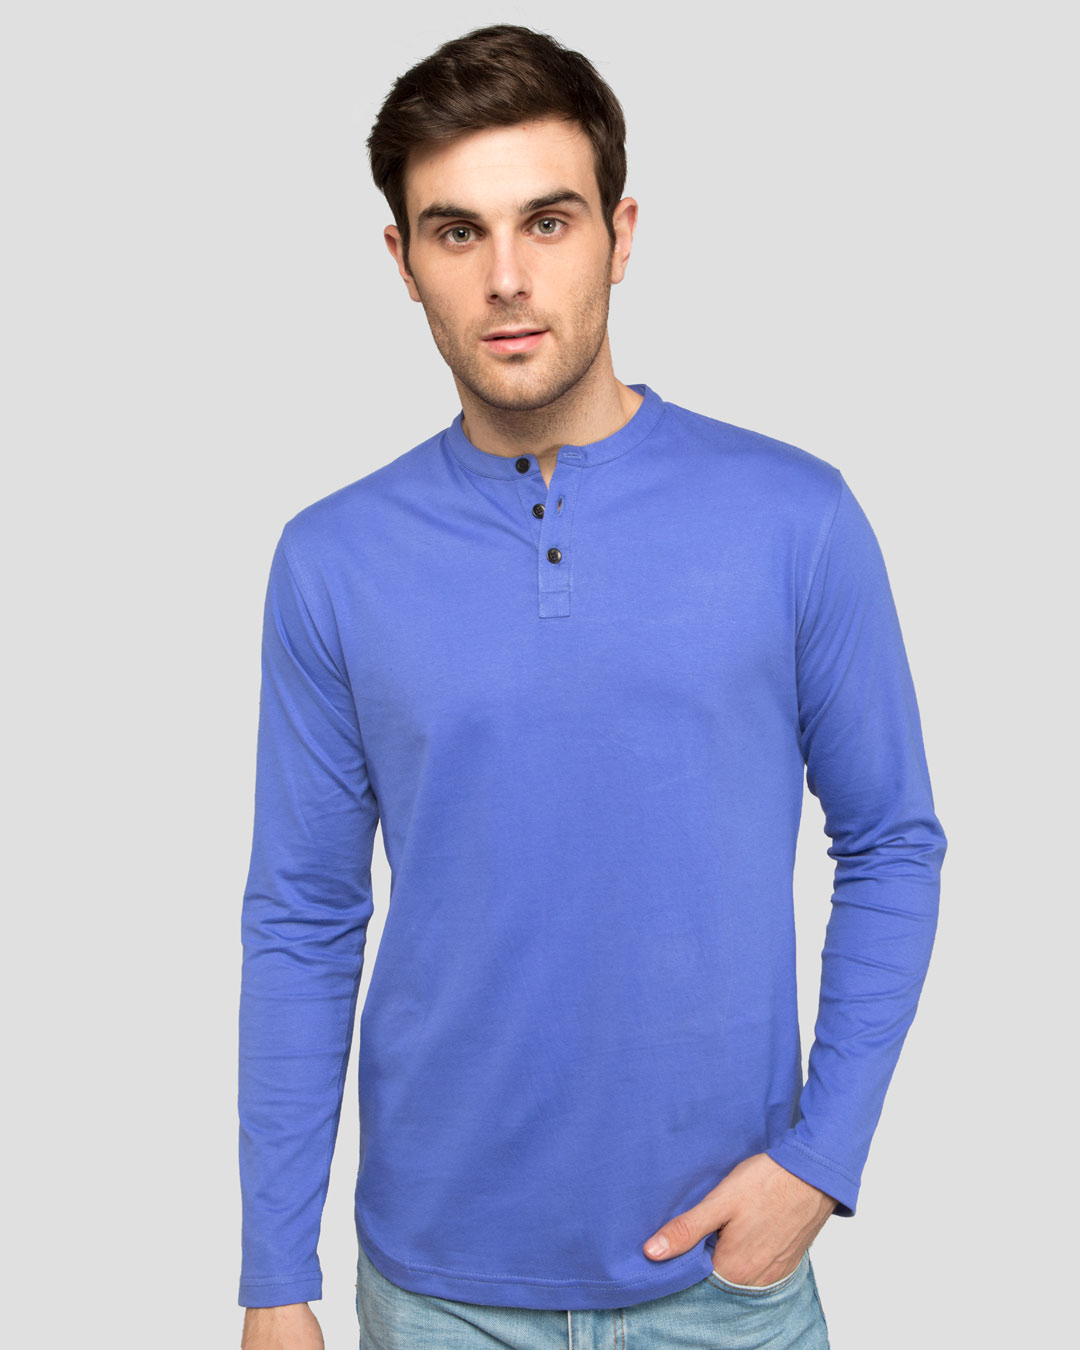 Buy Blue Haze Plain T-Shirt For Men Online India @ Bewakoof.com